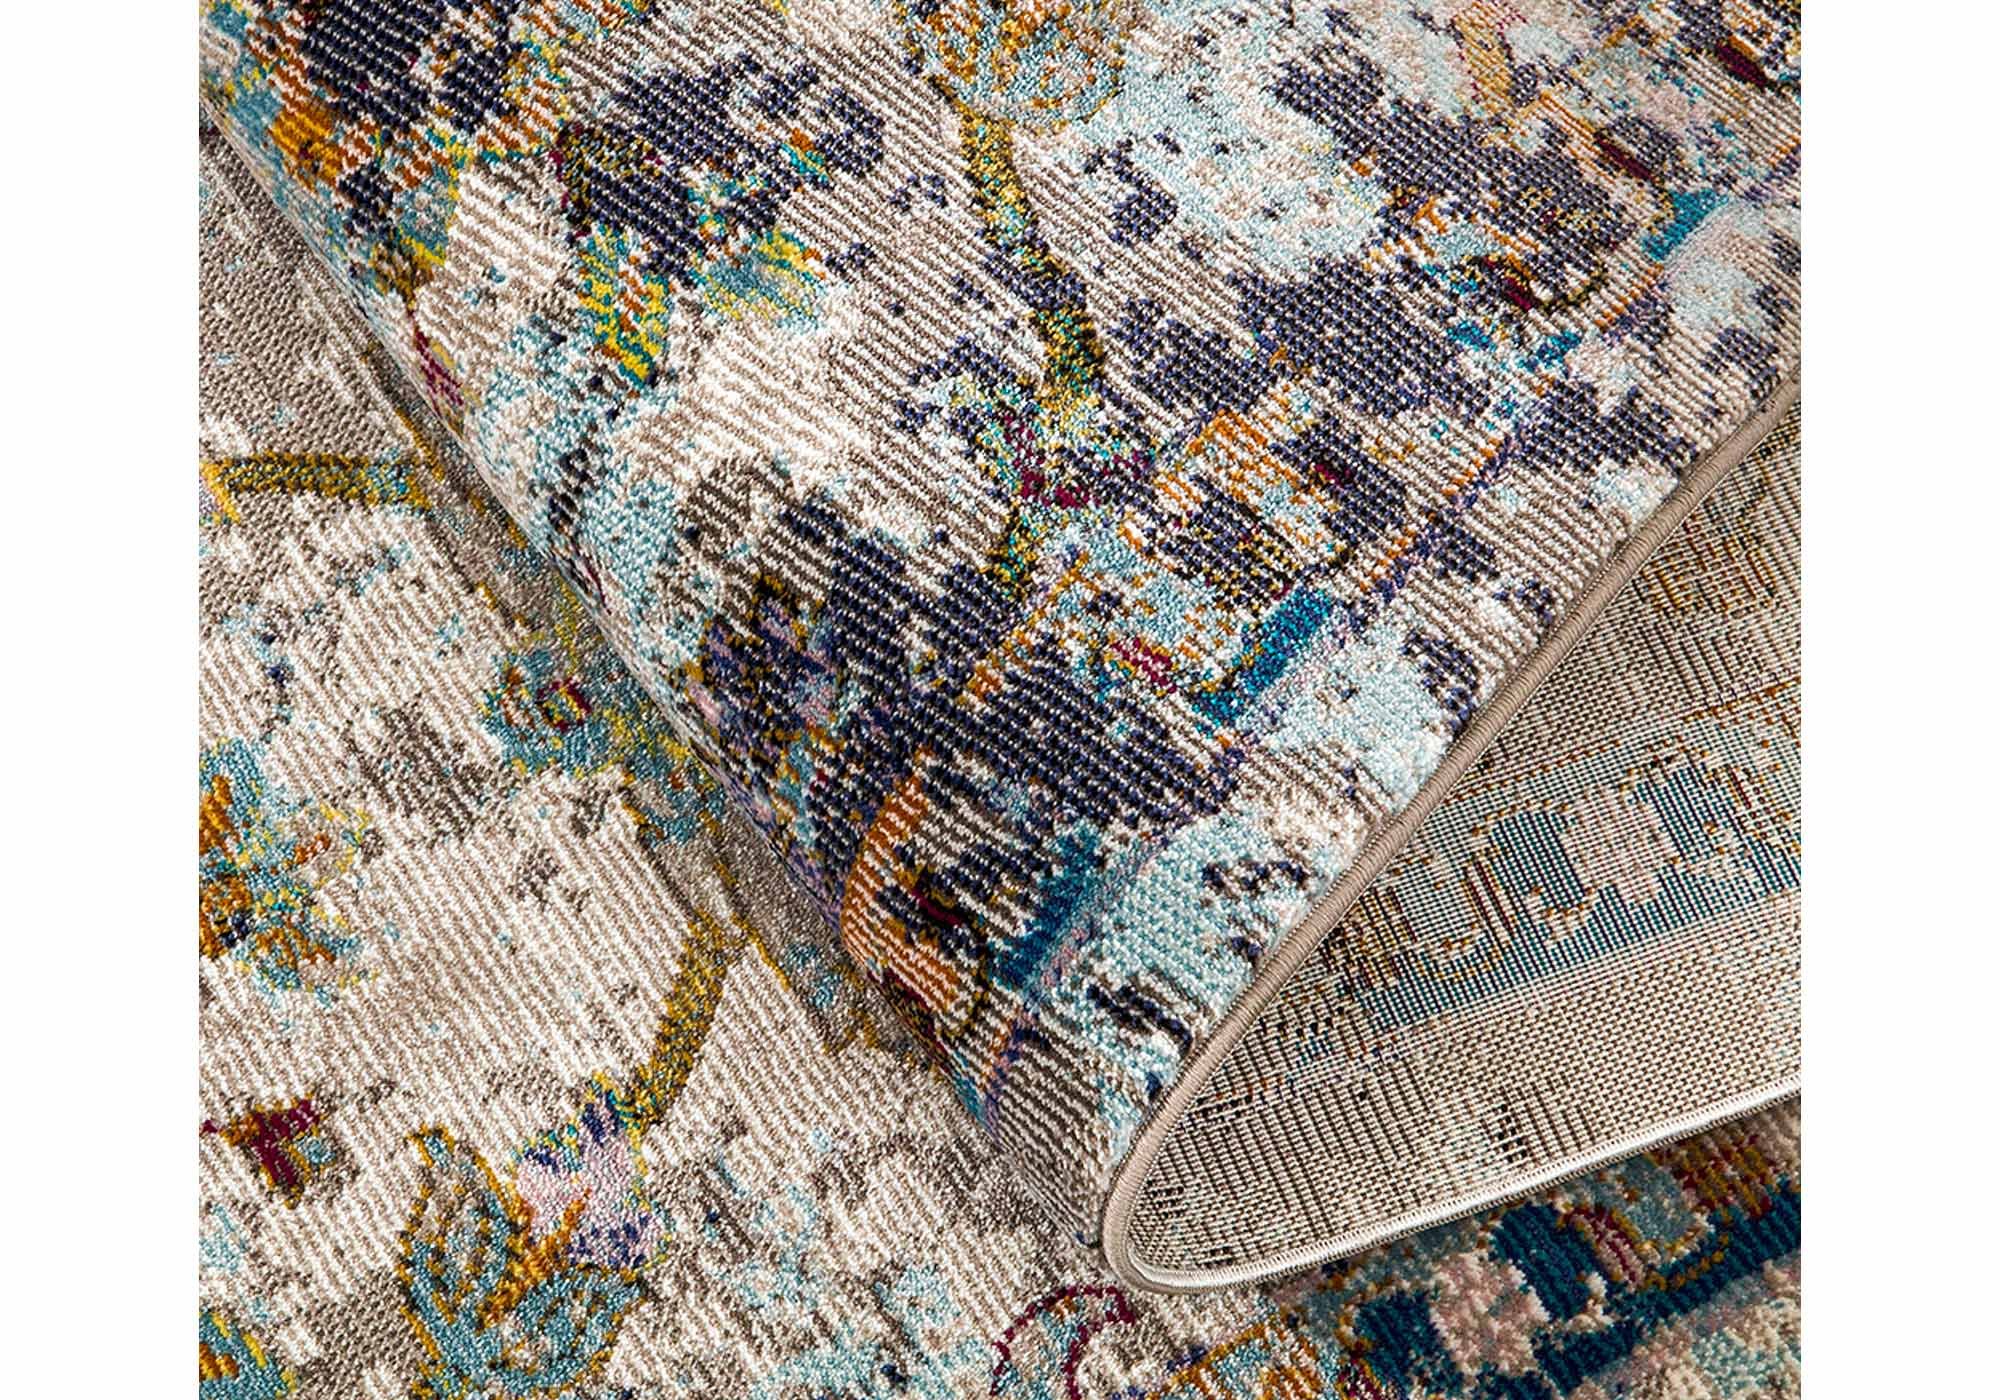 Festival Teppich 160 x 230 cm - mehrfarbig - 6 mm Florhöhe - Picasso 599